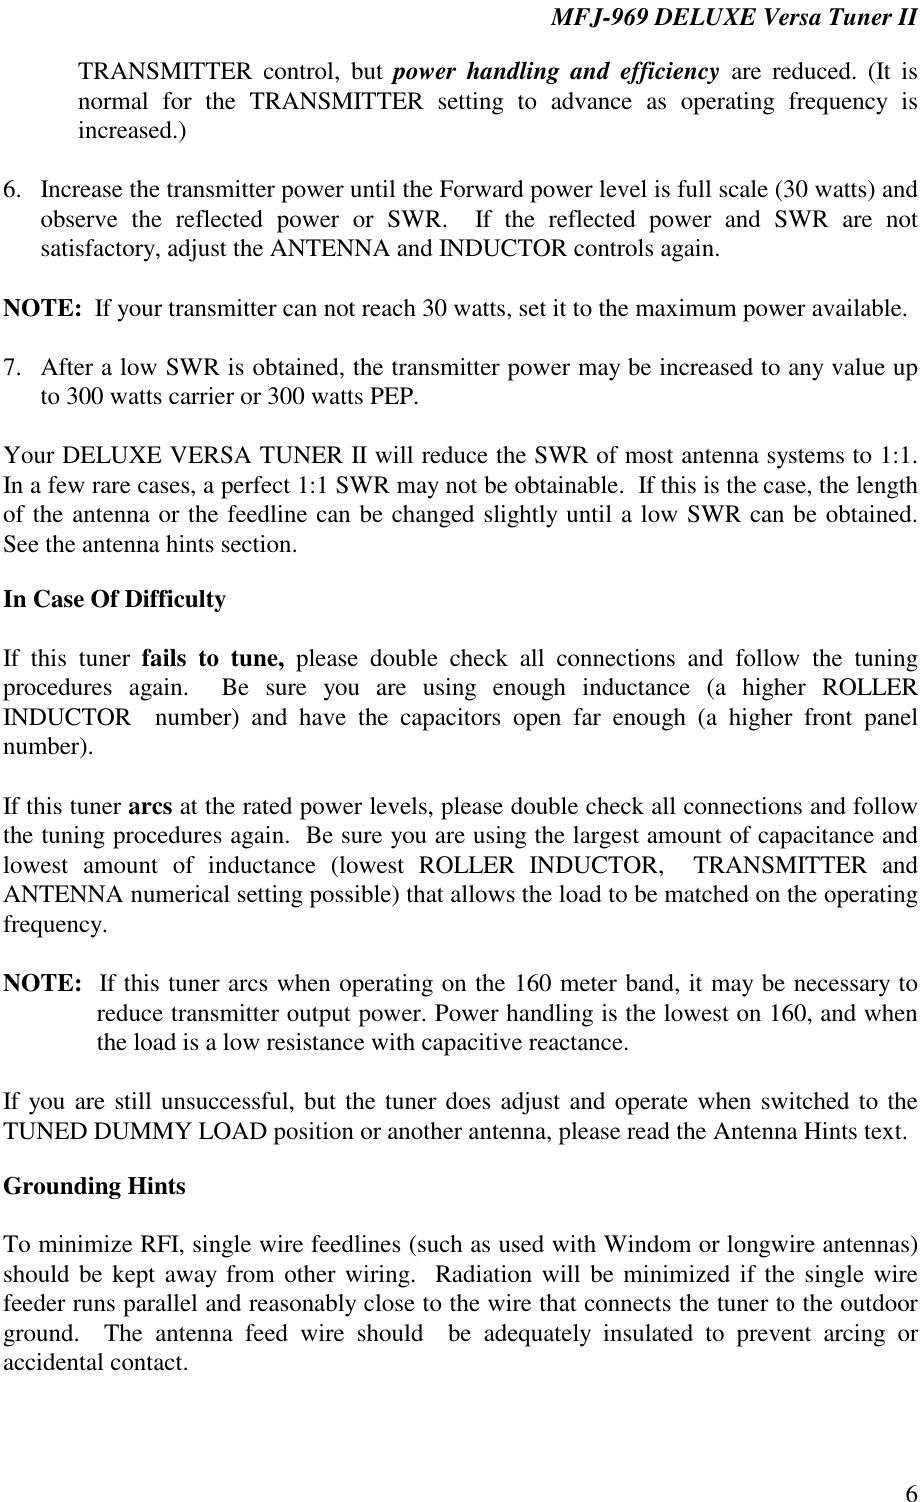 Page 6 of 10 - MFJ-969 Deluxe Versa Tuner II MFJ--969--Antenna Tuner-Manual